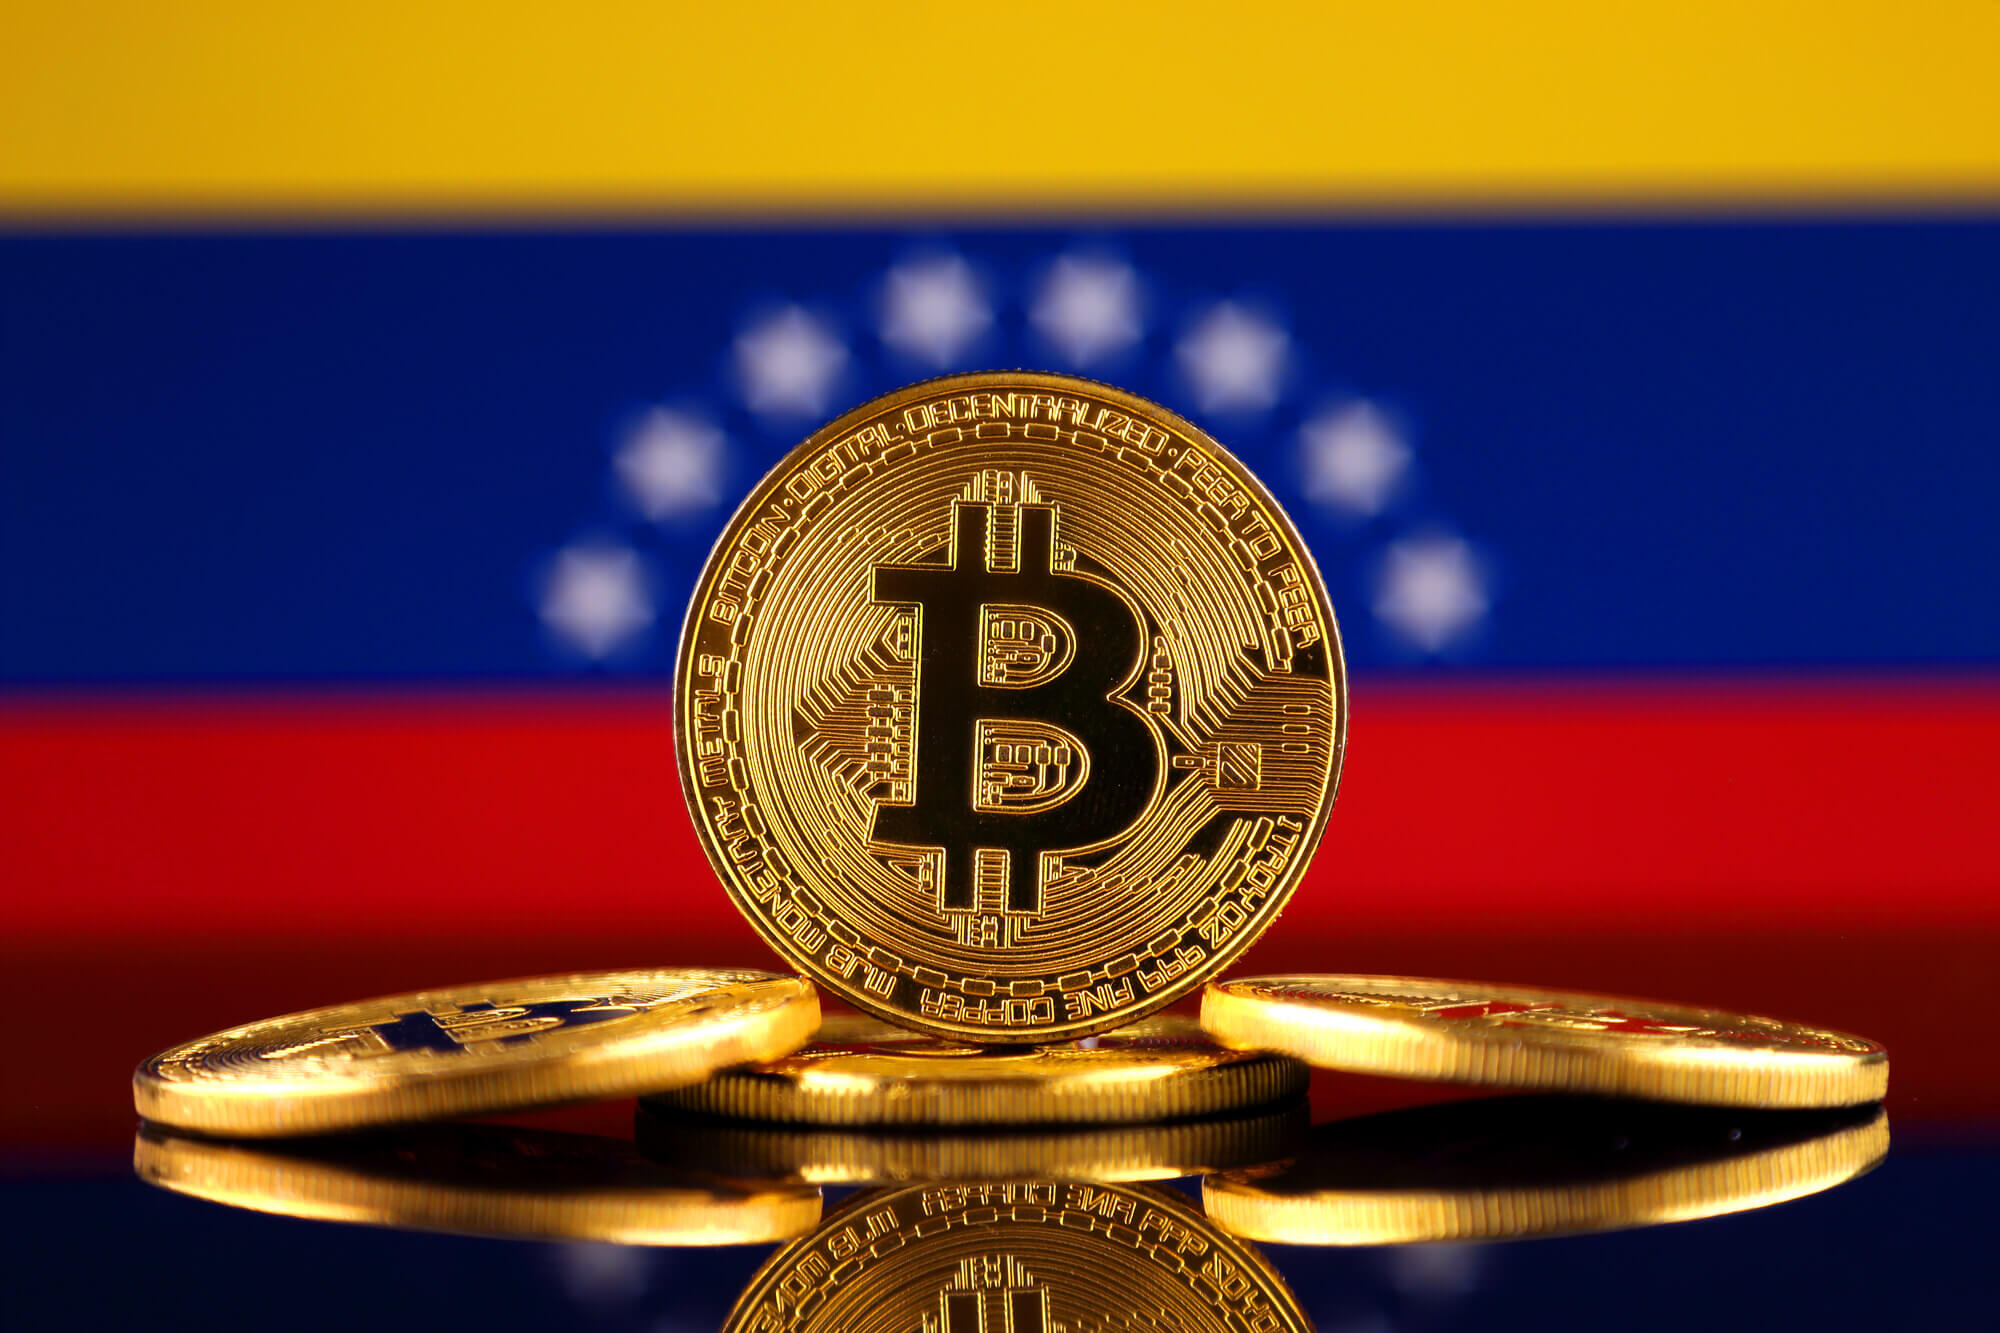 venezuelada enflasyon ile mücadelede bitcoin desteği